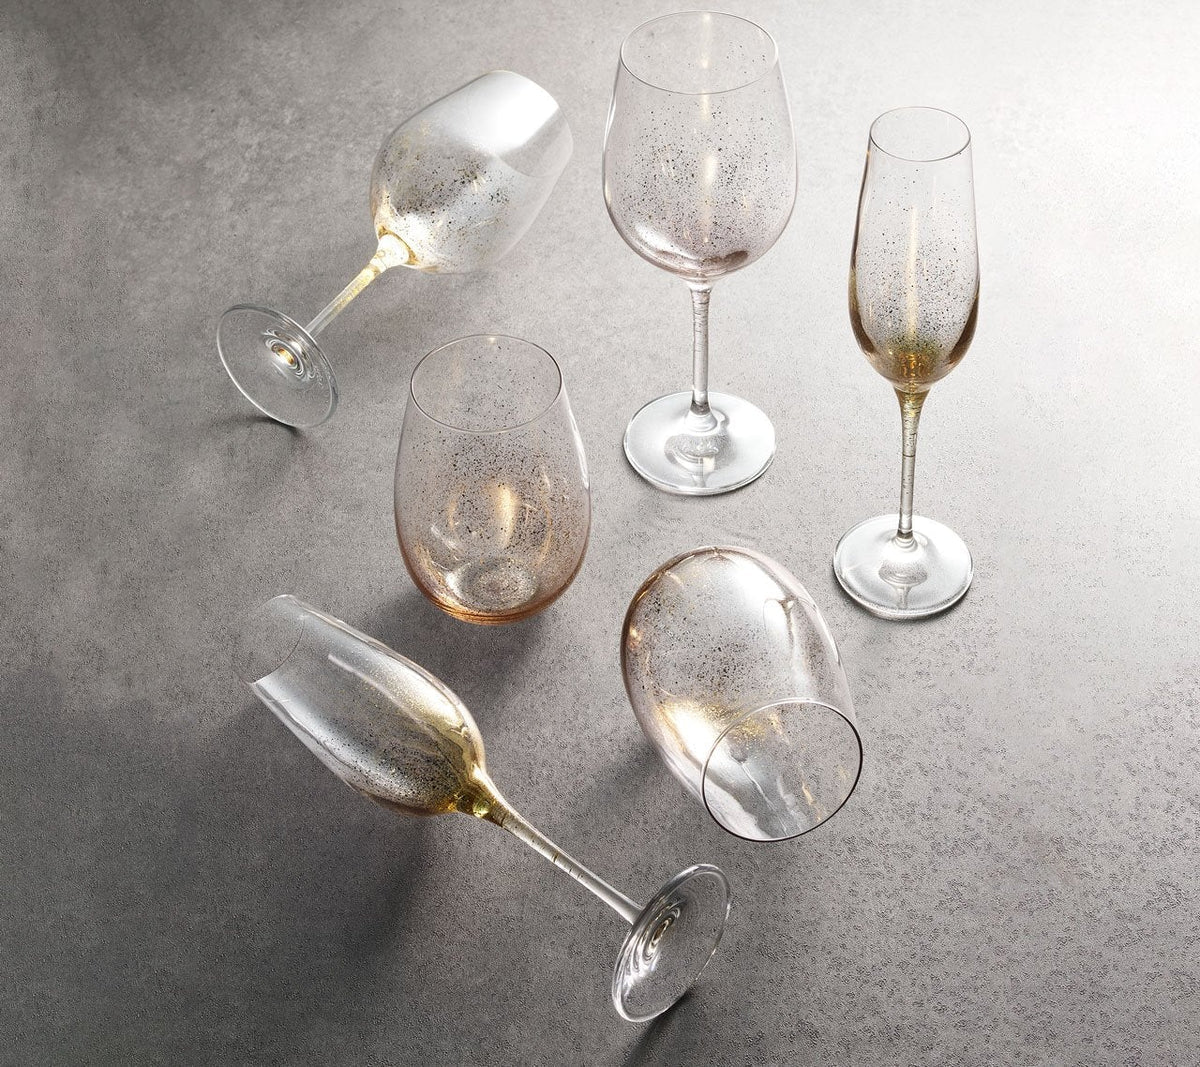 Kim Seybert Paillette White Wine Glass in Gold - Set of 4